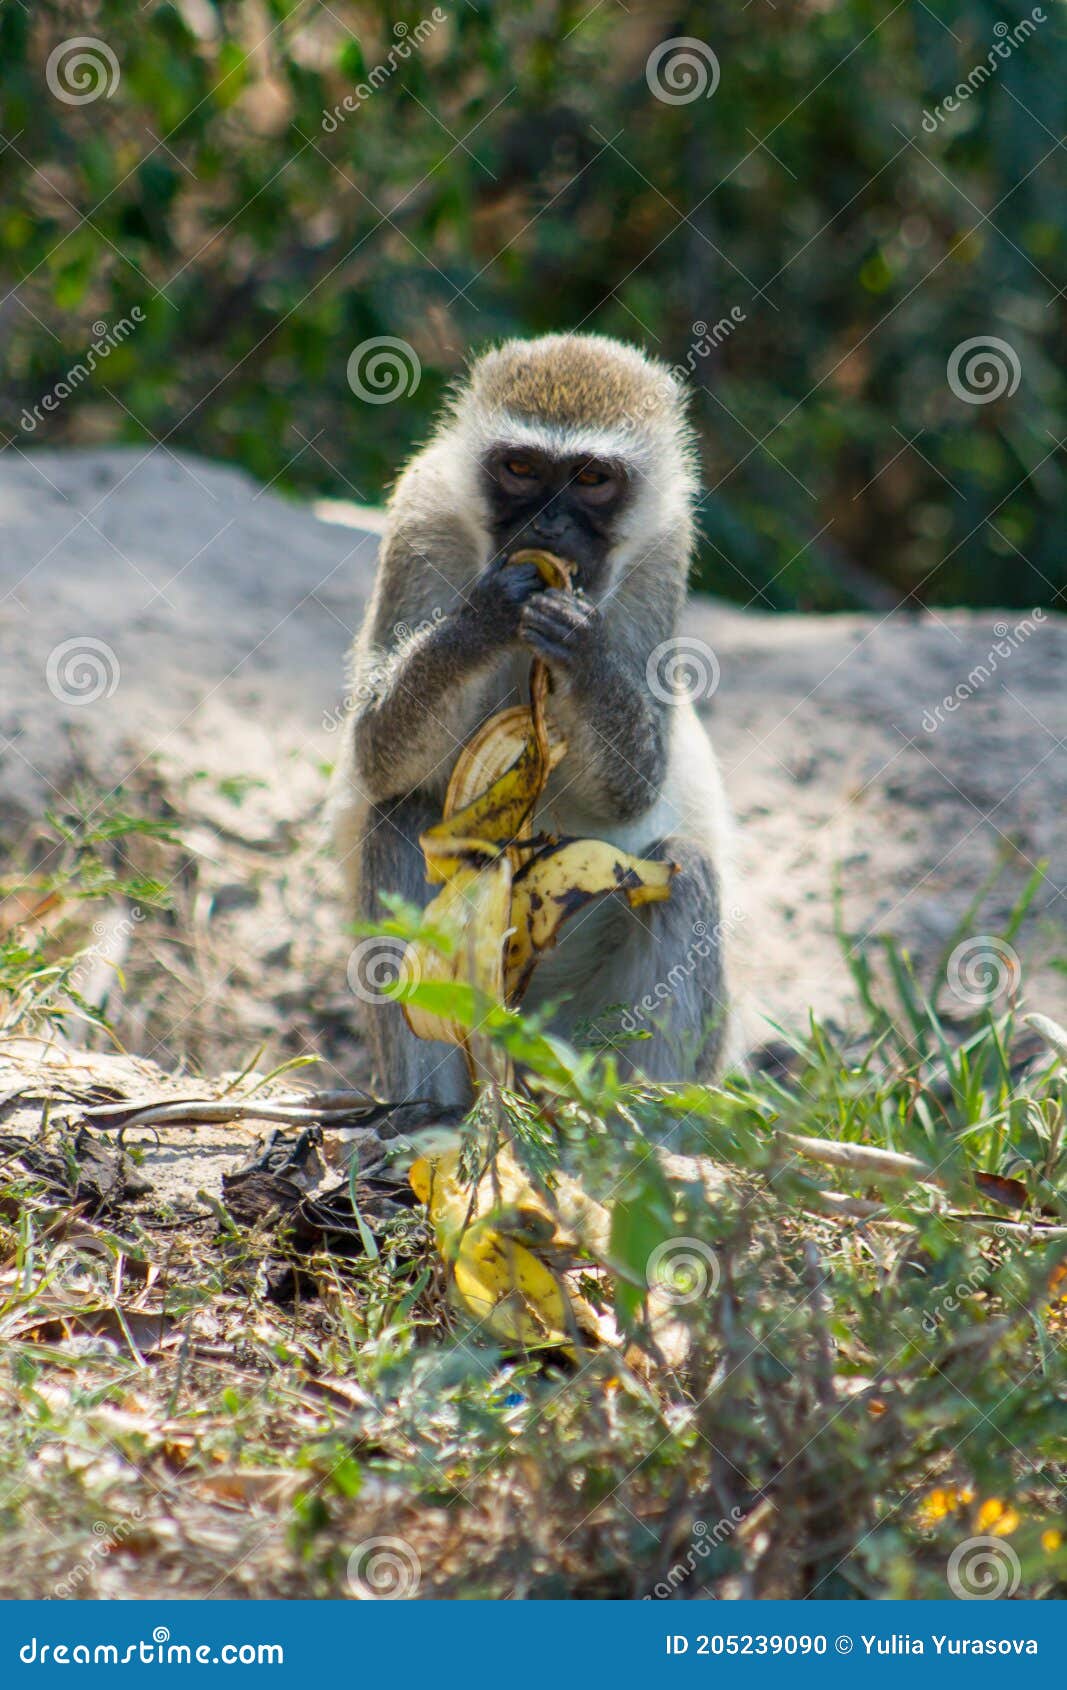 monkey eating banana